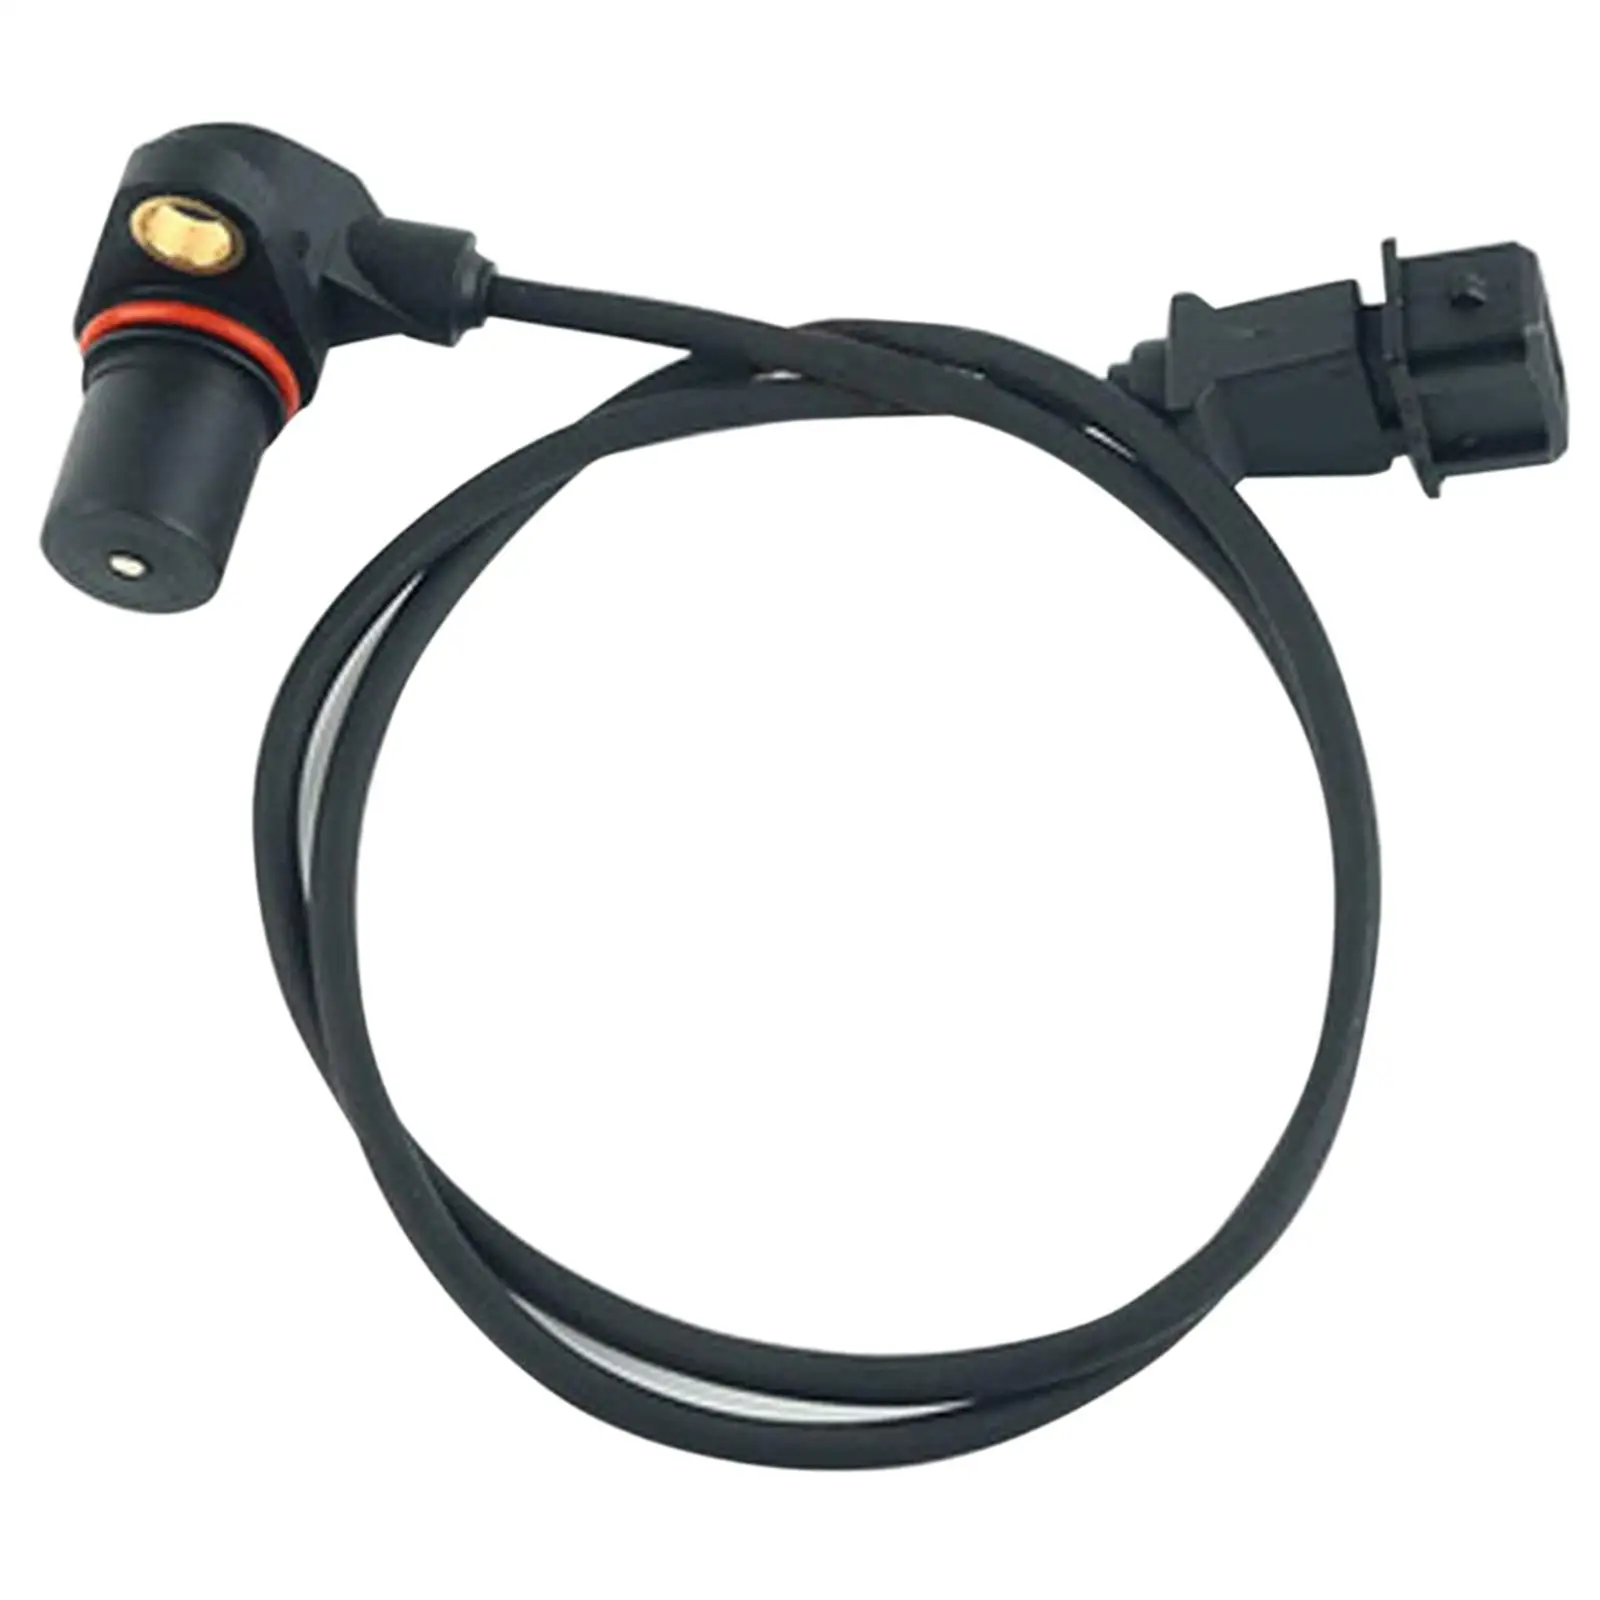 Crankshaft Position Sensor Mounting Auto Parts Replacement Fit for R20 2.7D 98 to 07 TD27TI